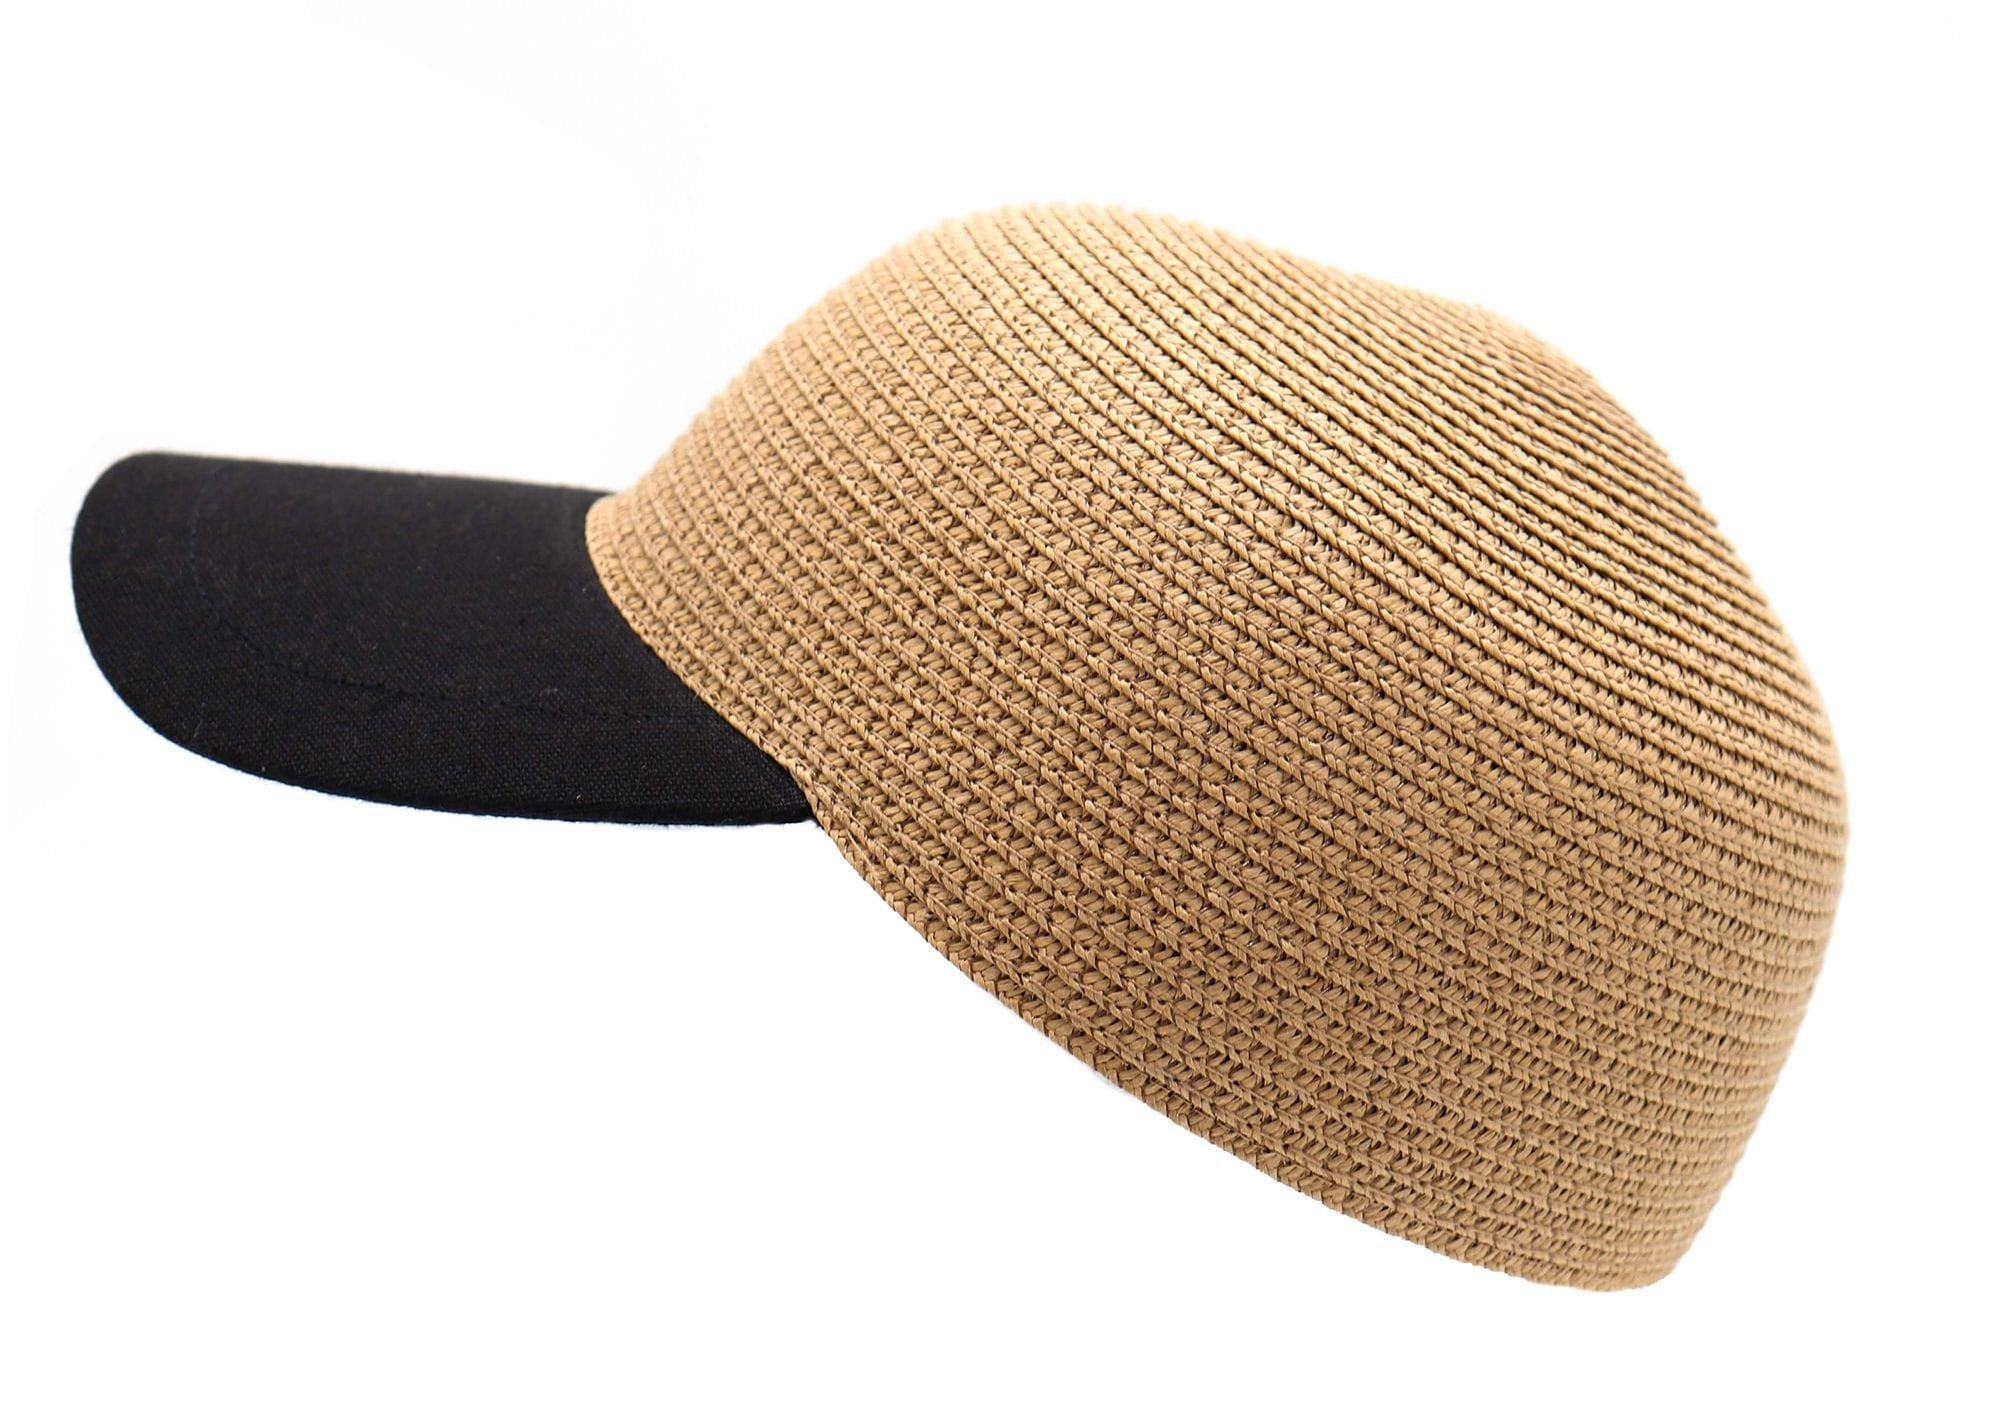 Breathable Baseball Cap - Paper Straw Hat with Fabric Brim - Unisex  Spring/Summer Accessory - Cute Fashionable Beach Wear - Stylish Sun Hat